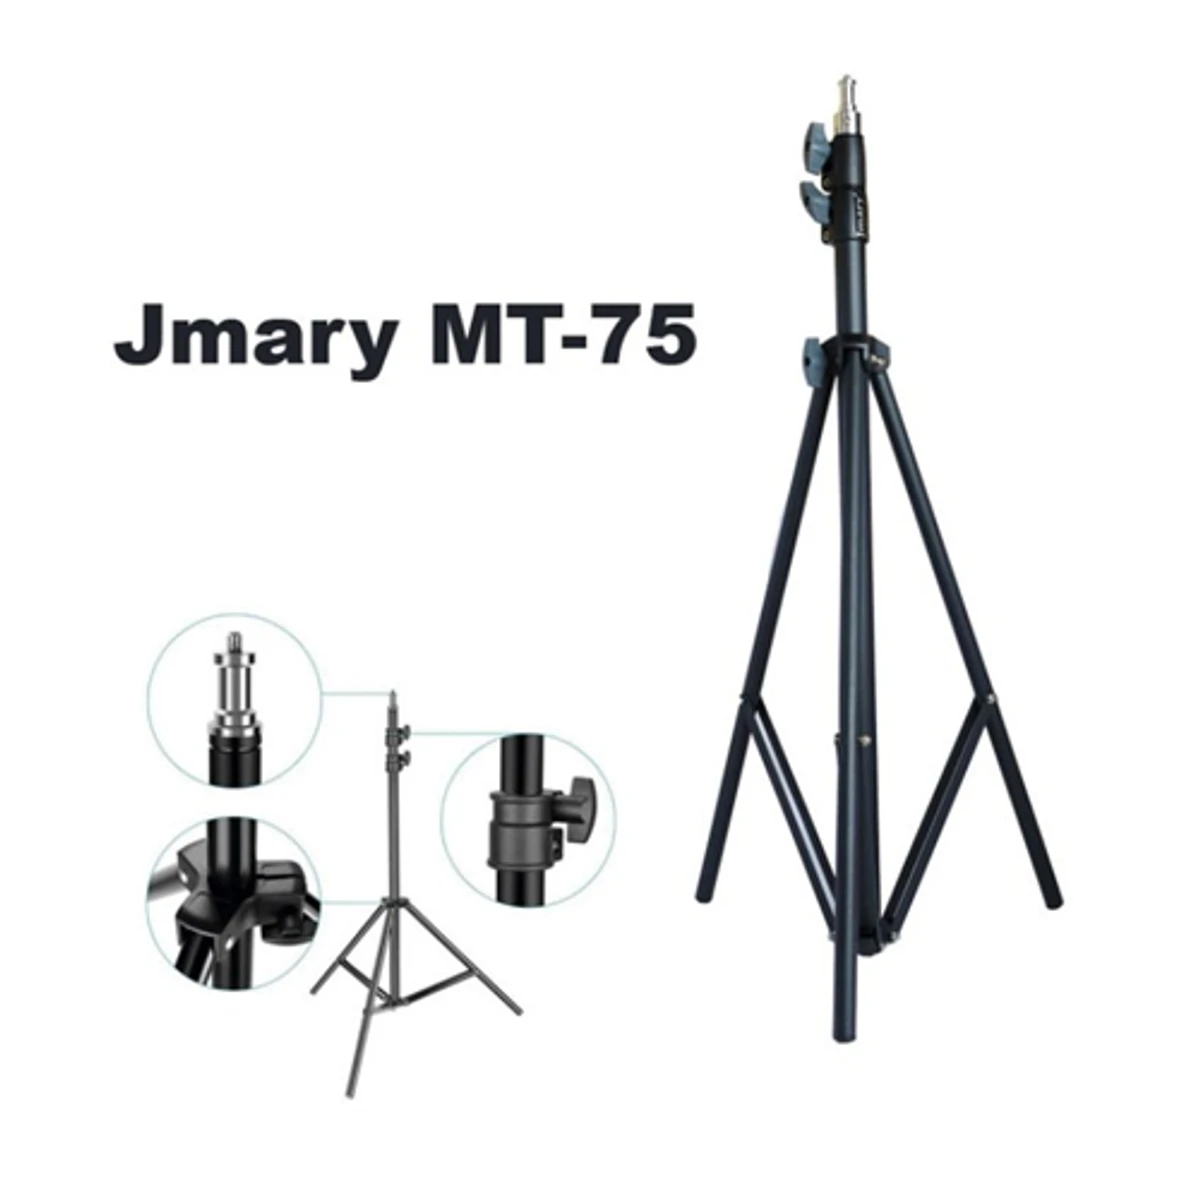 Jmary MT-75 Tripod